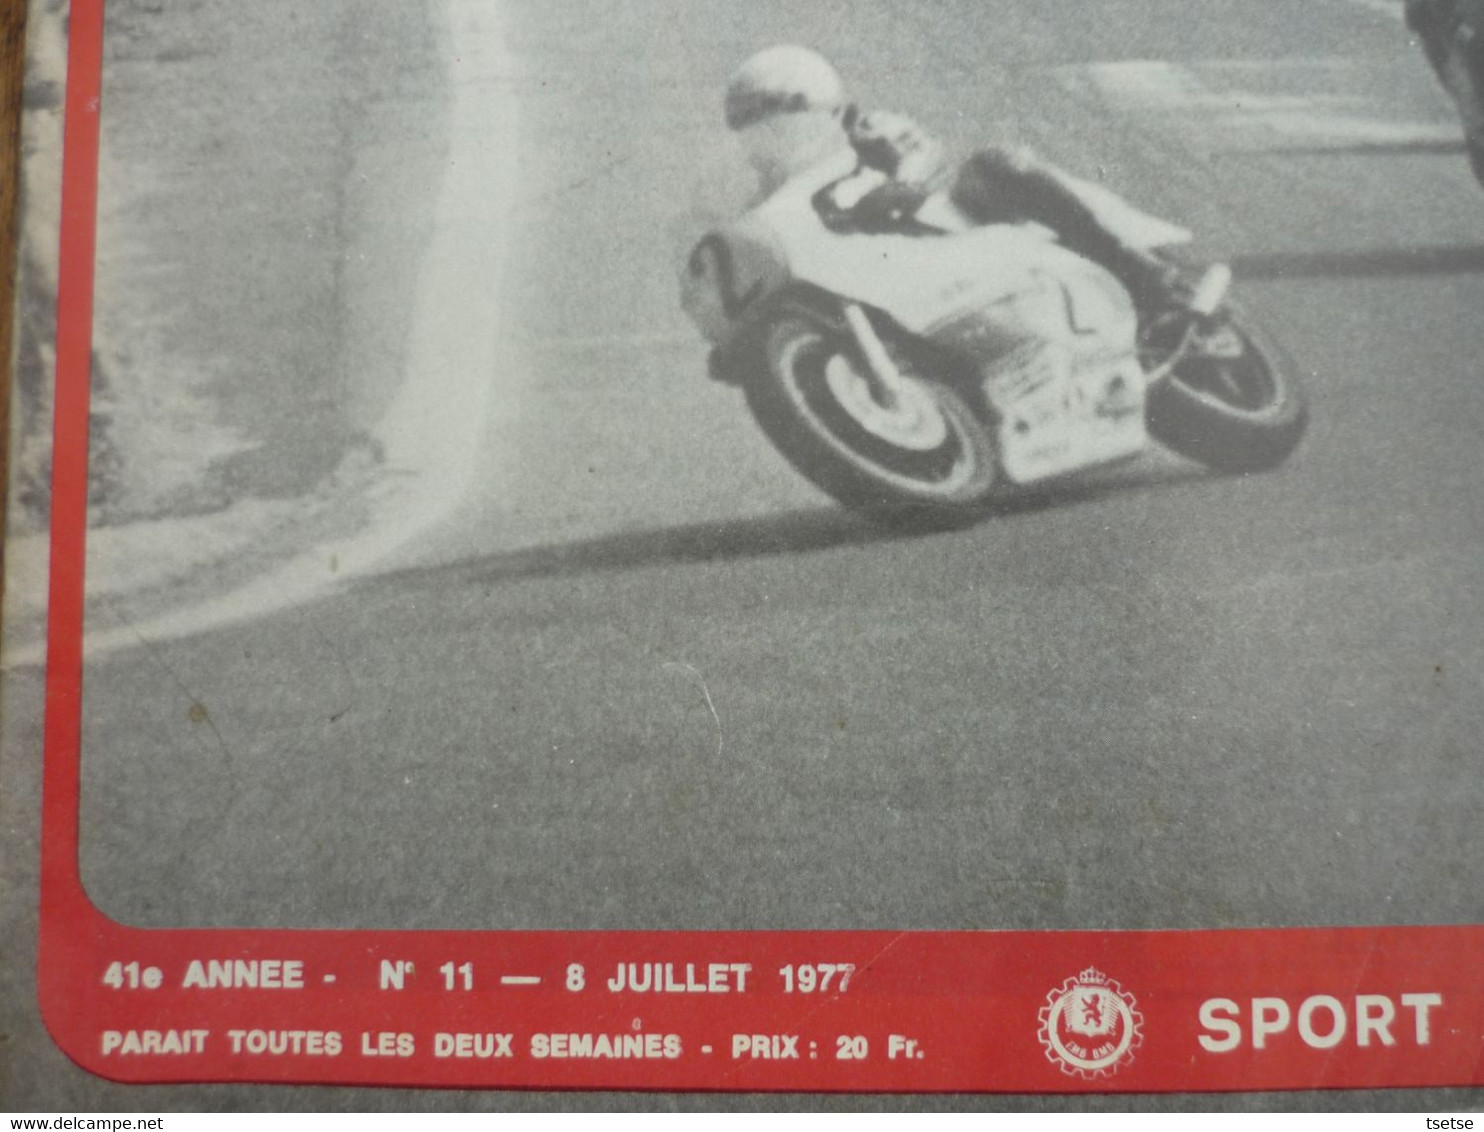 Revue Moto Magazine - N° 11 - 8 Juillet 1977 - Motorrad